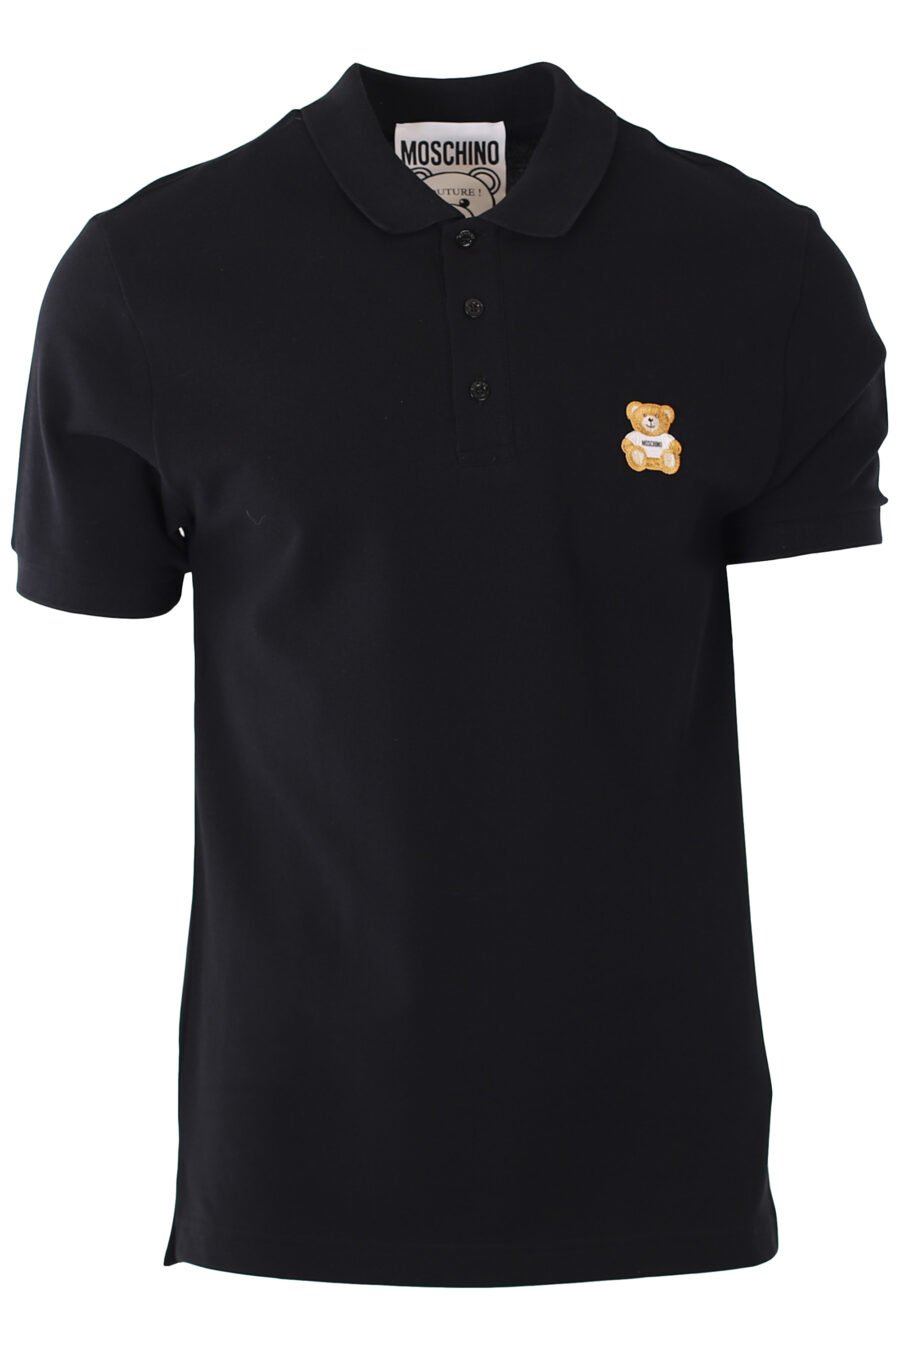 Schwarzes Poloshirt mit gesticktem Bären-Mini-Logo - IMG 9348